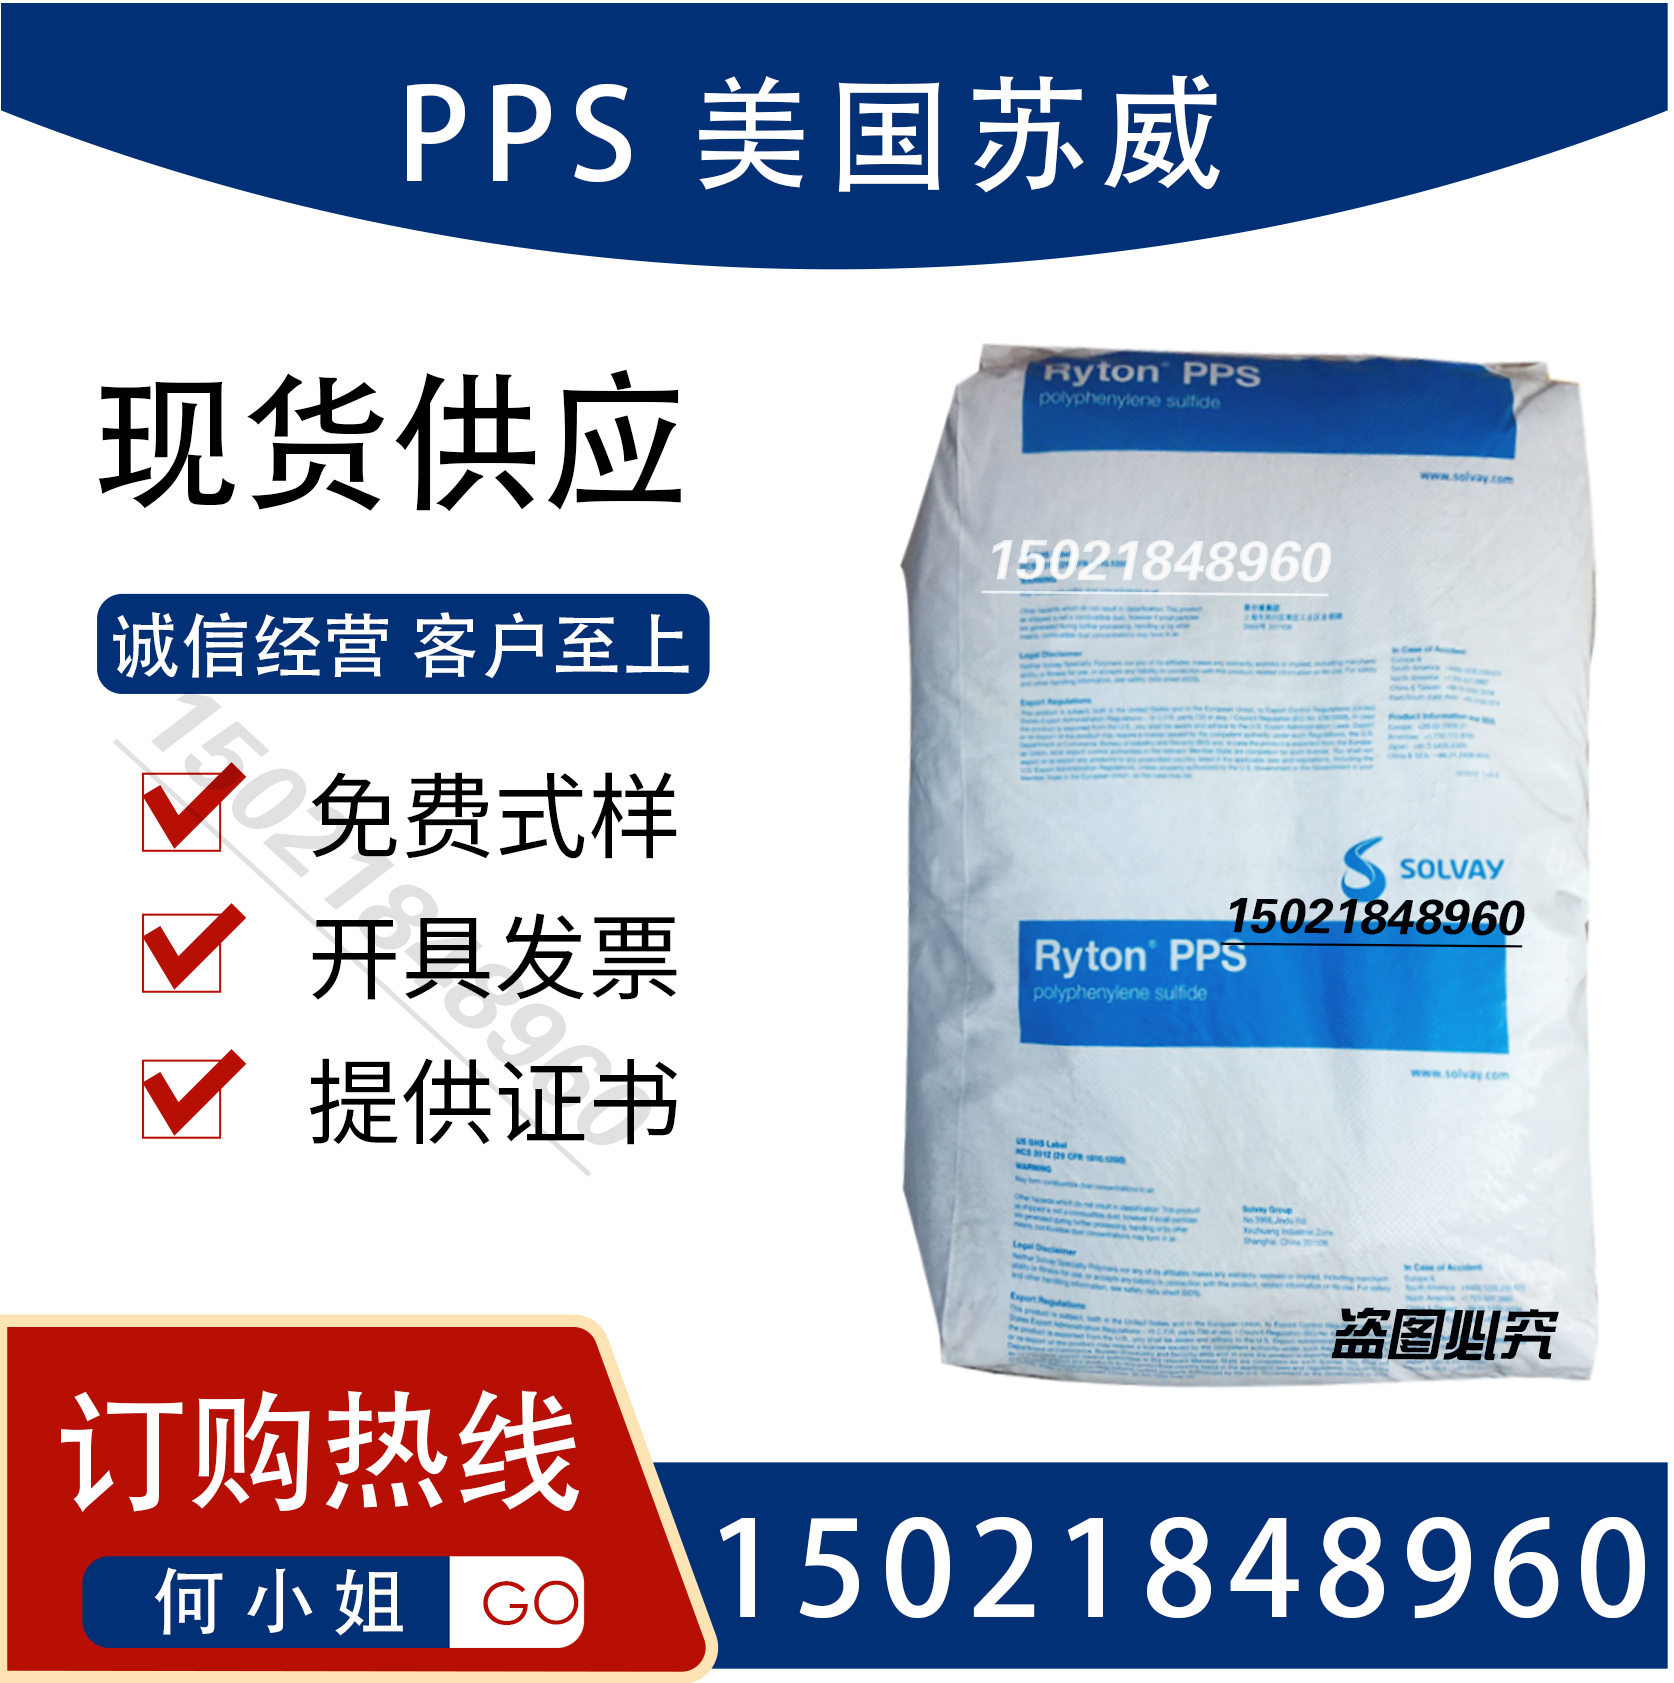 PPS塑料 苏威 R-4 40%玻纤增强 耐高温265度 PPS代理PPS塑胶原料